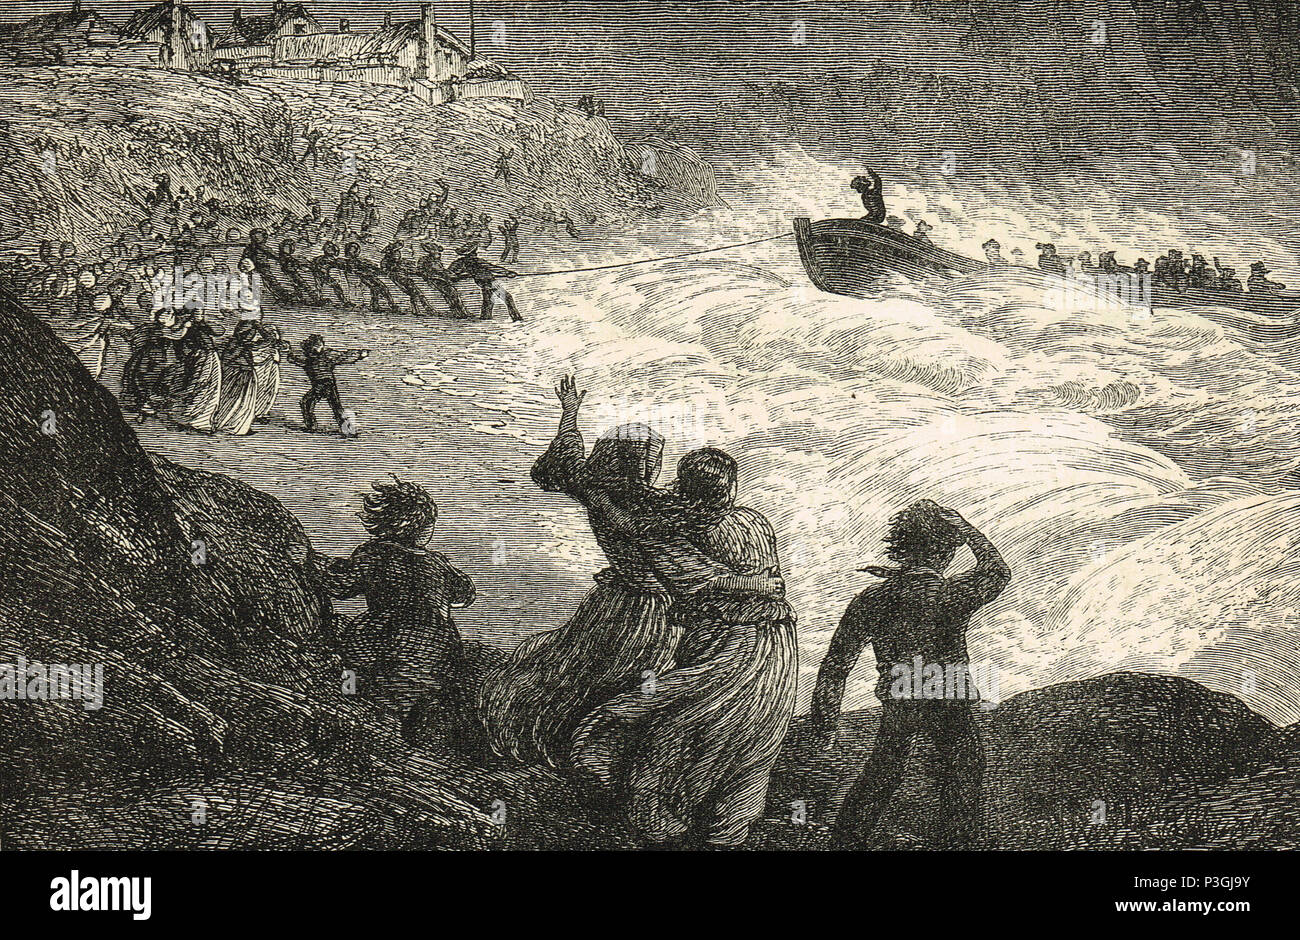 Return of the lifeboat, 19th Century illustration Stock Photo